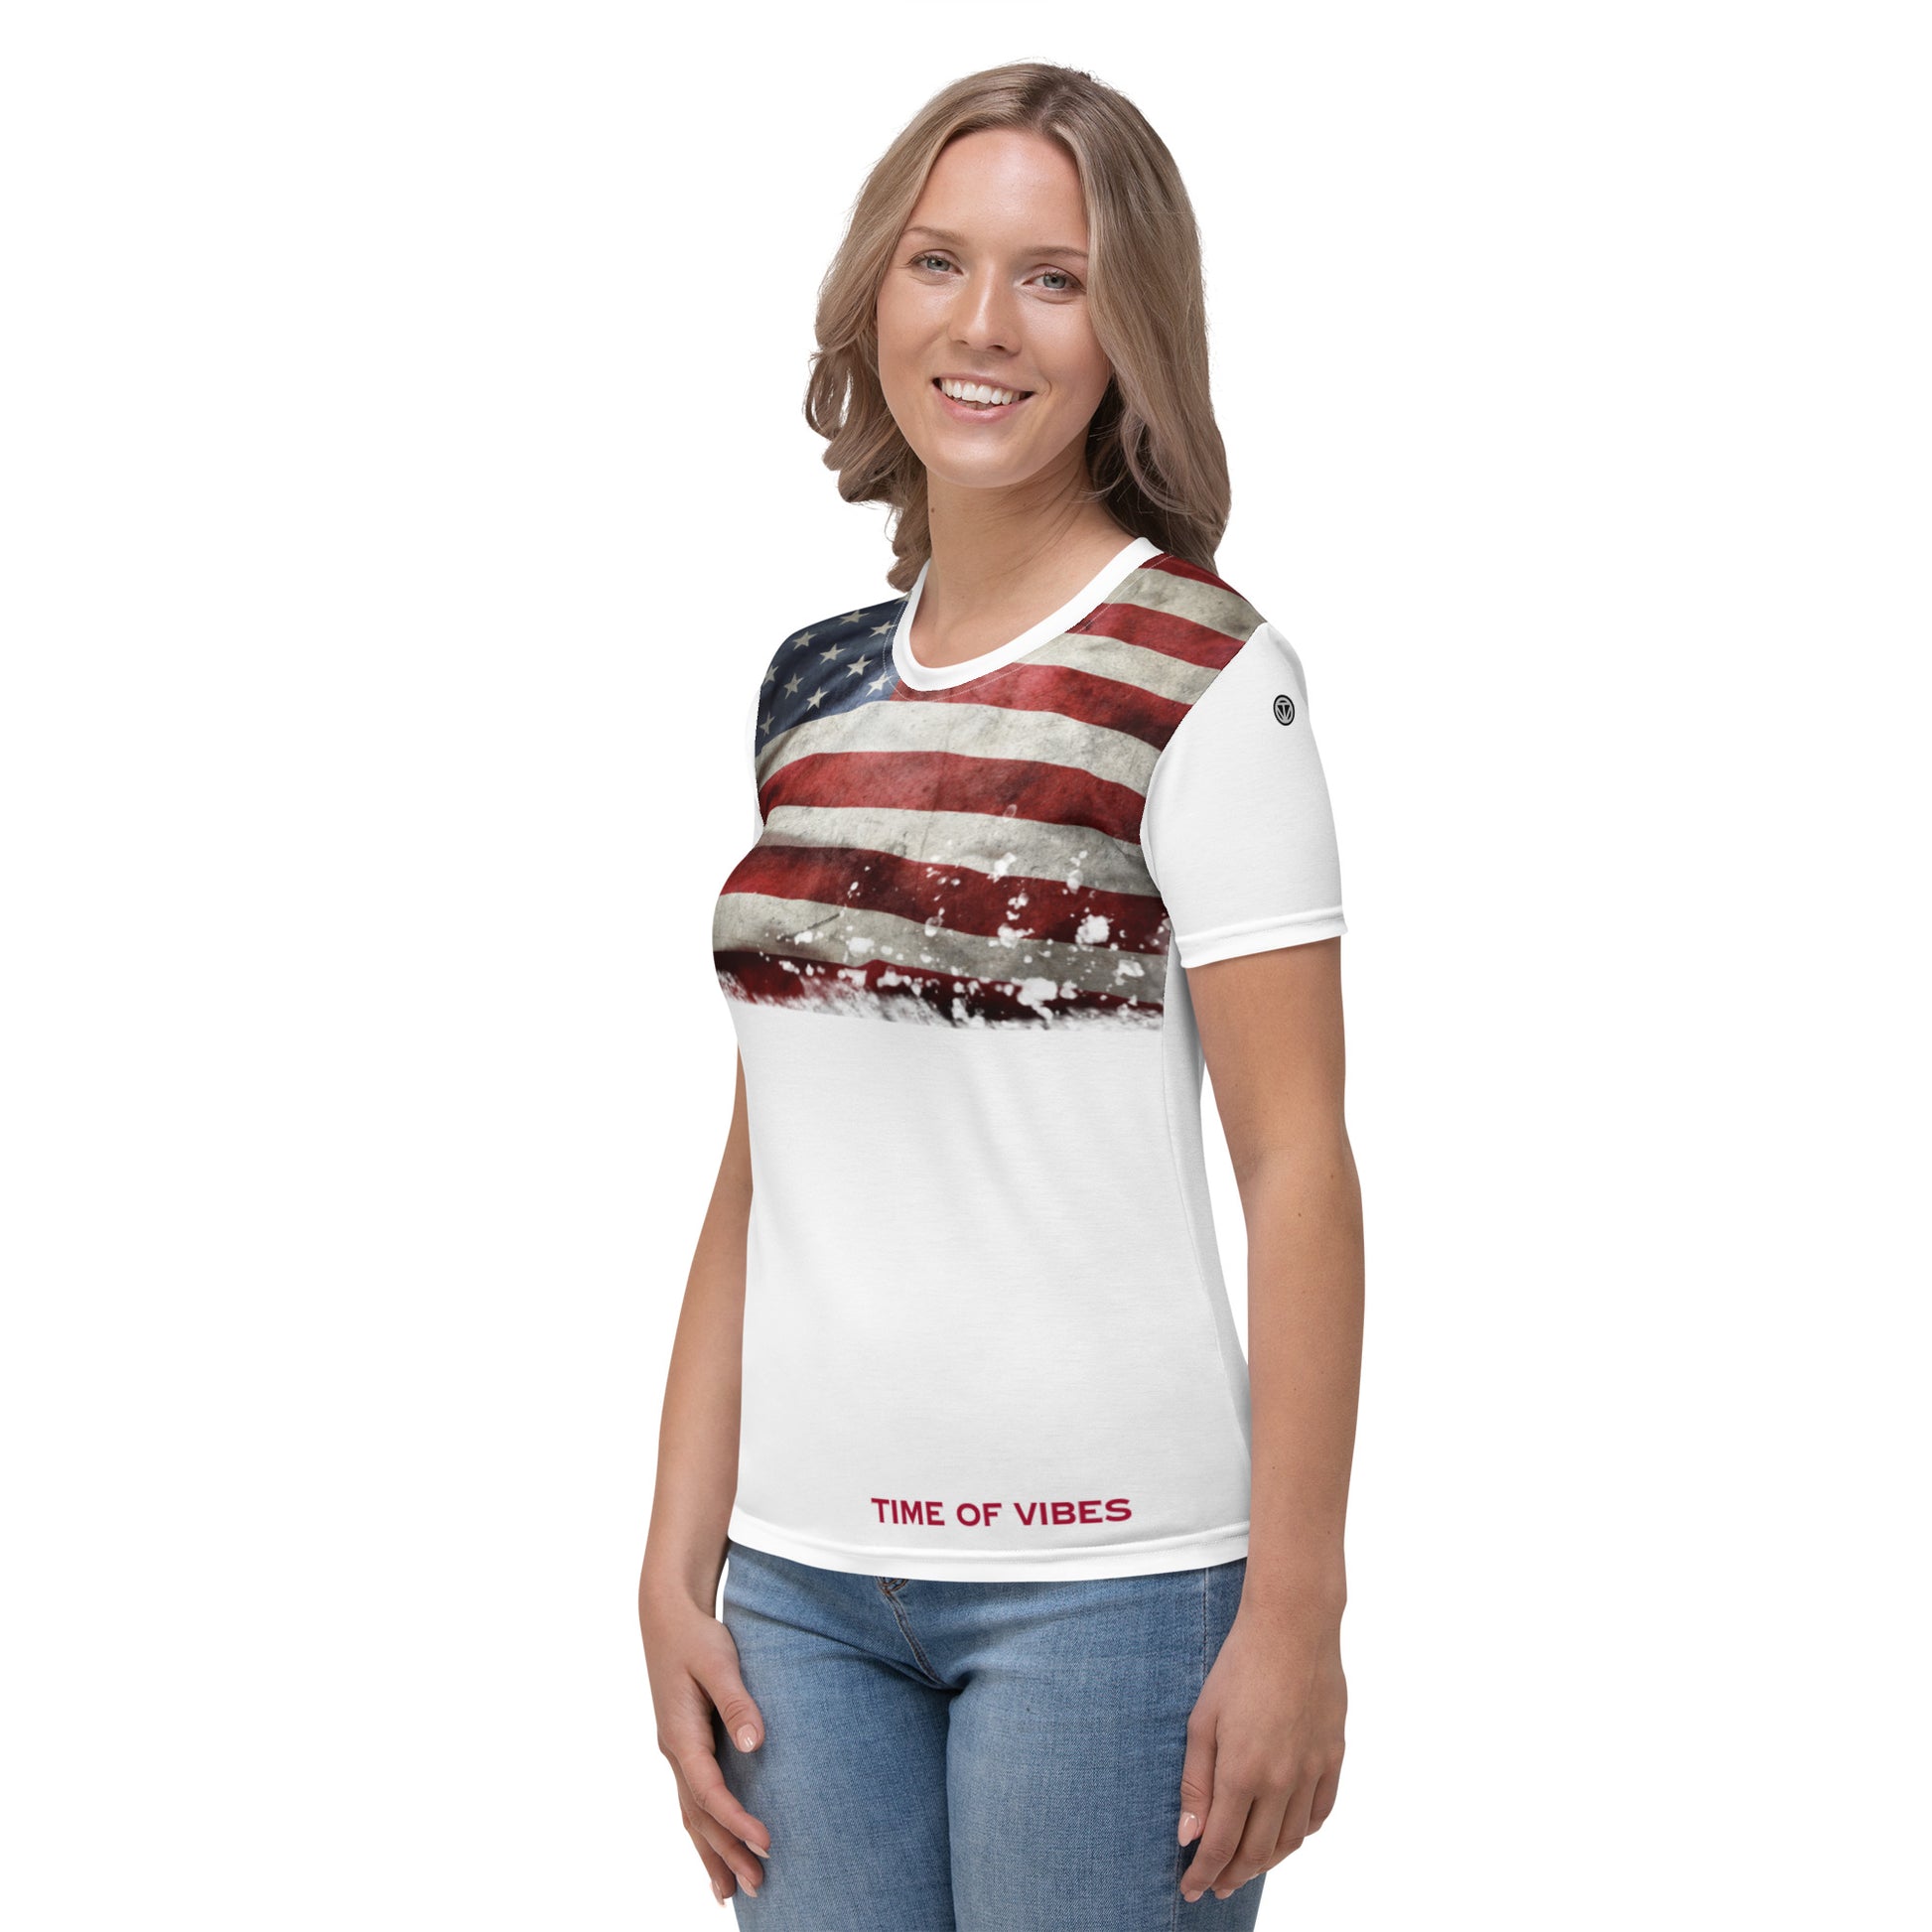 TIME OF VIBES - Premium Women's T-Shirt USA (White) - €49.00